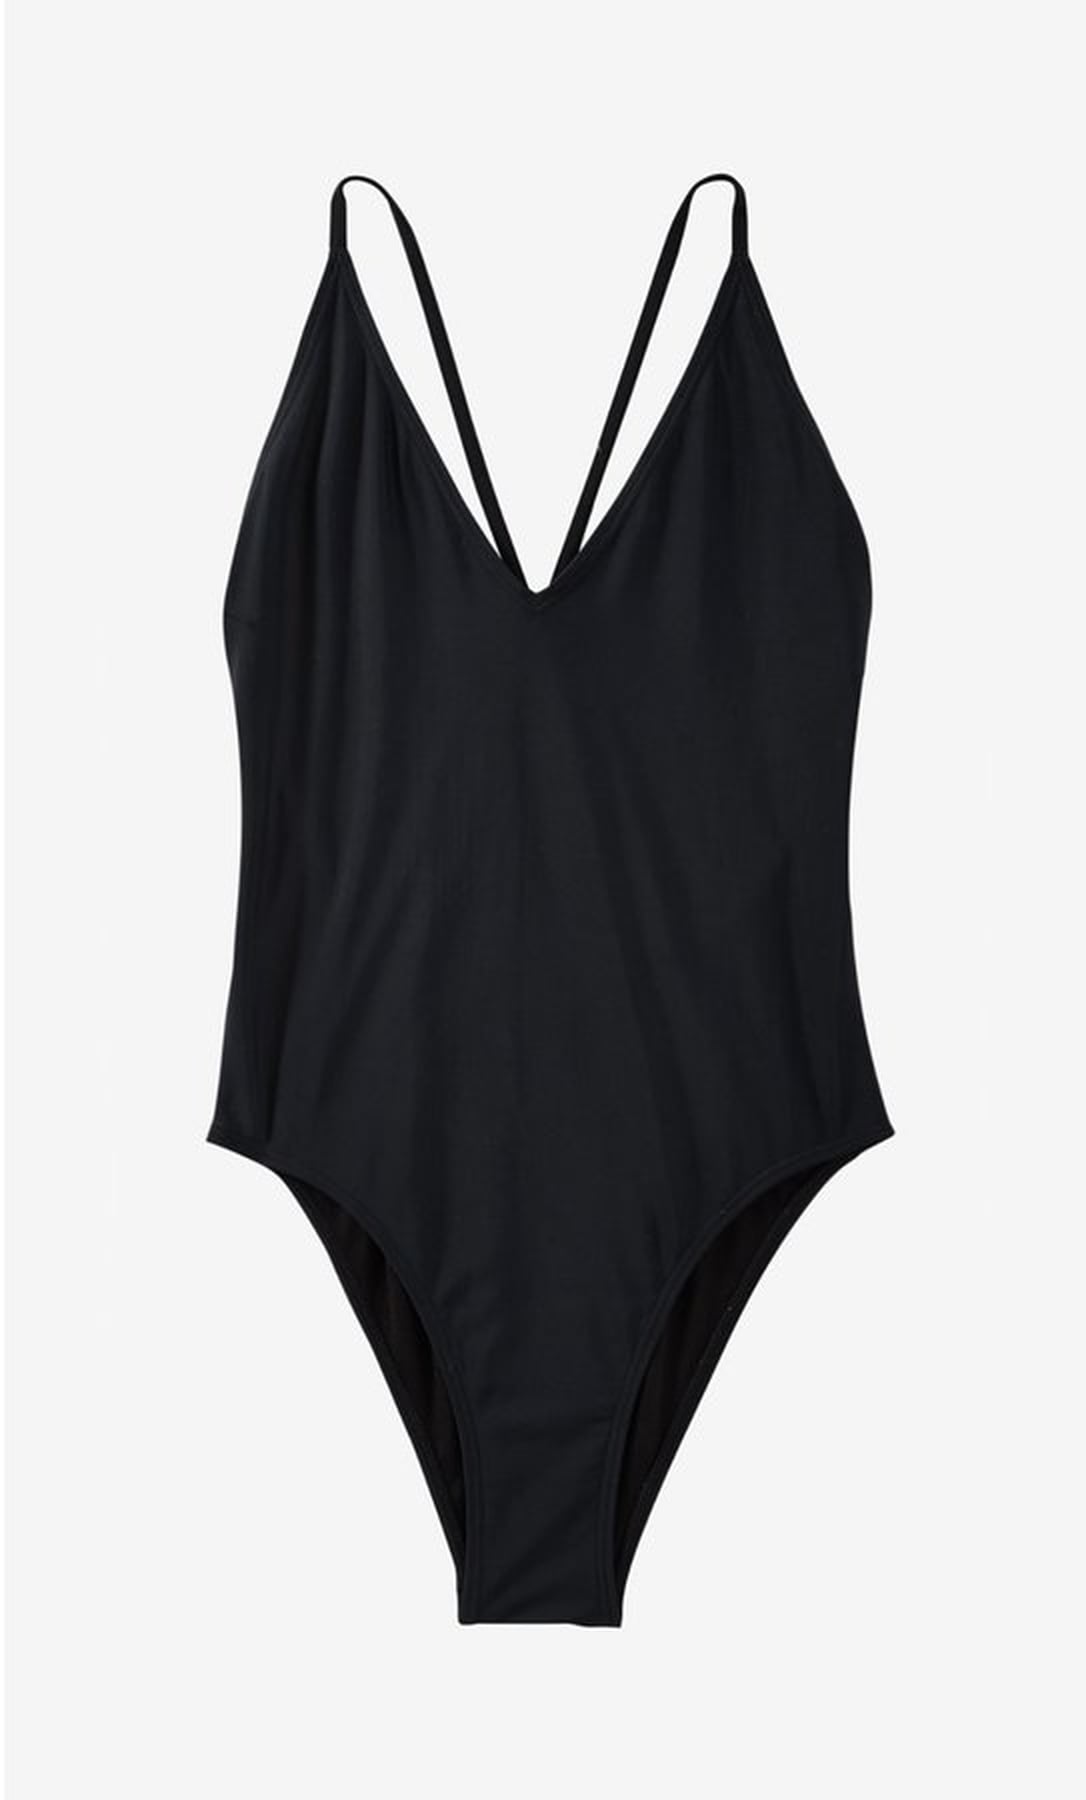 Lea Michele in a Black One-Piece Swimsuit | Instagram | POPSUGAR Fashion